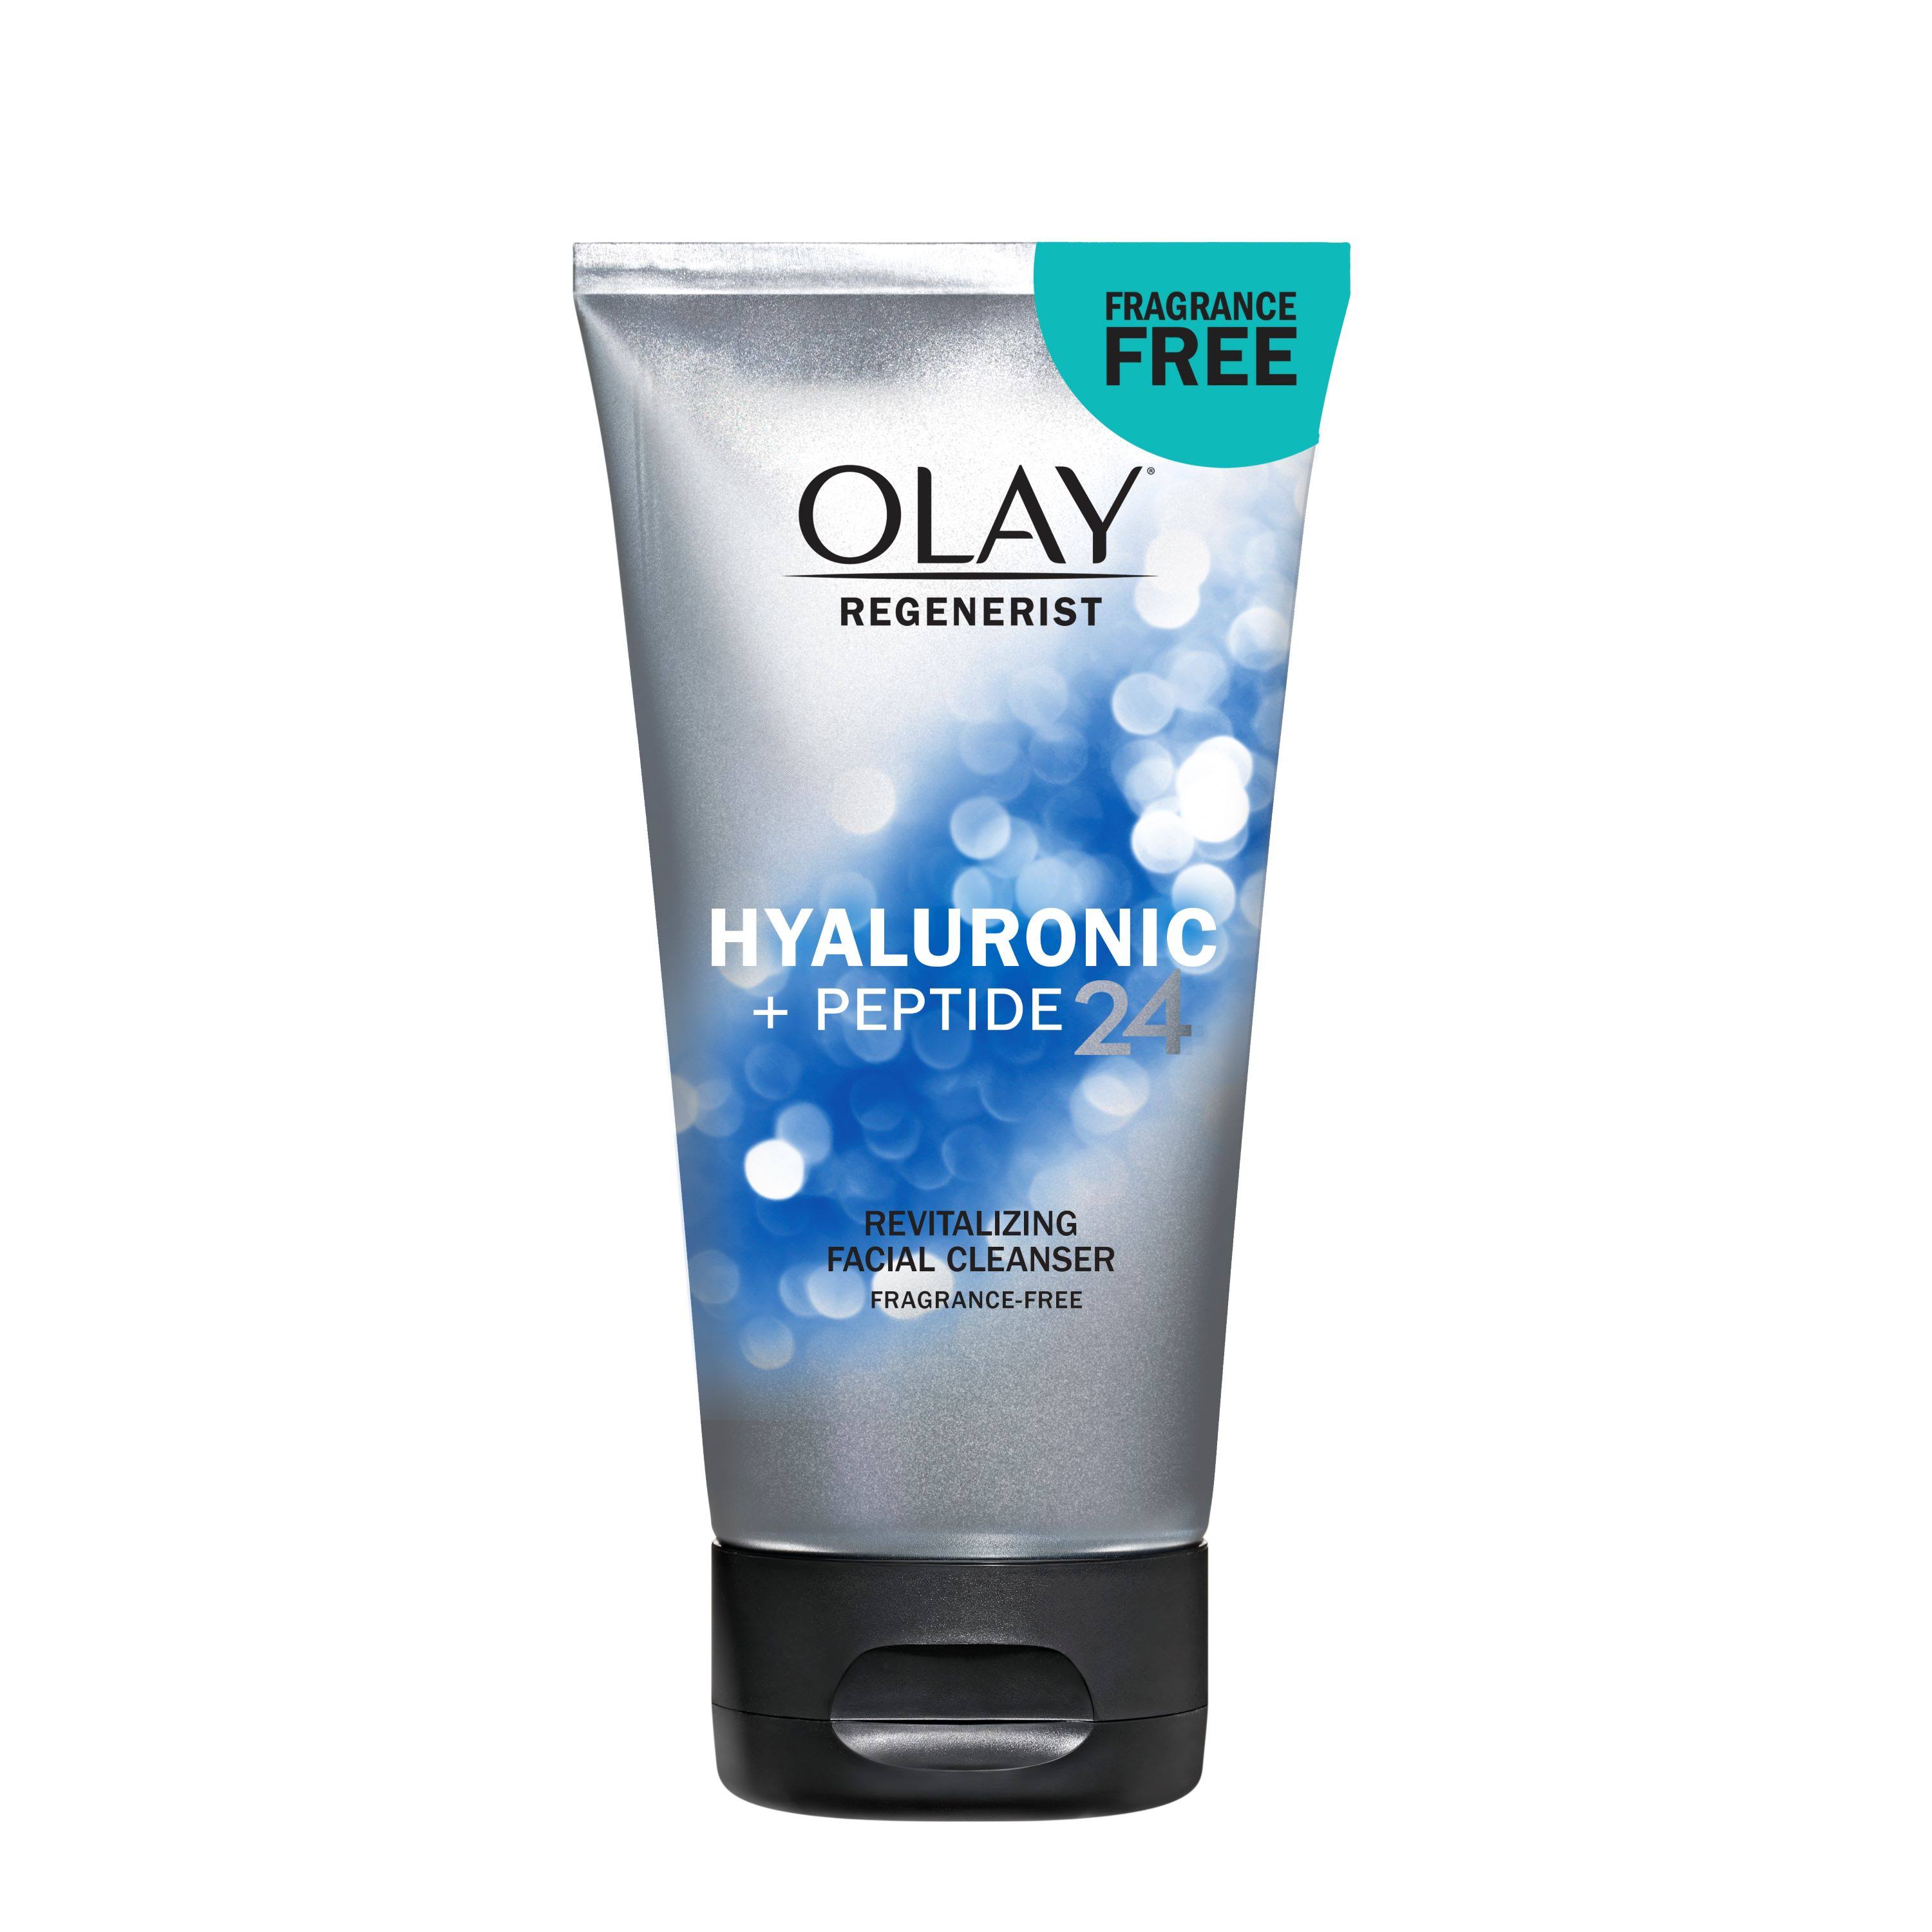 Olay Regenerist Hyaluronic + Peptide 24 Face Wash - 5 fl oz